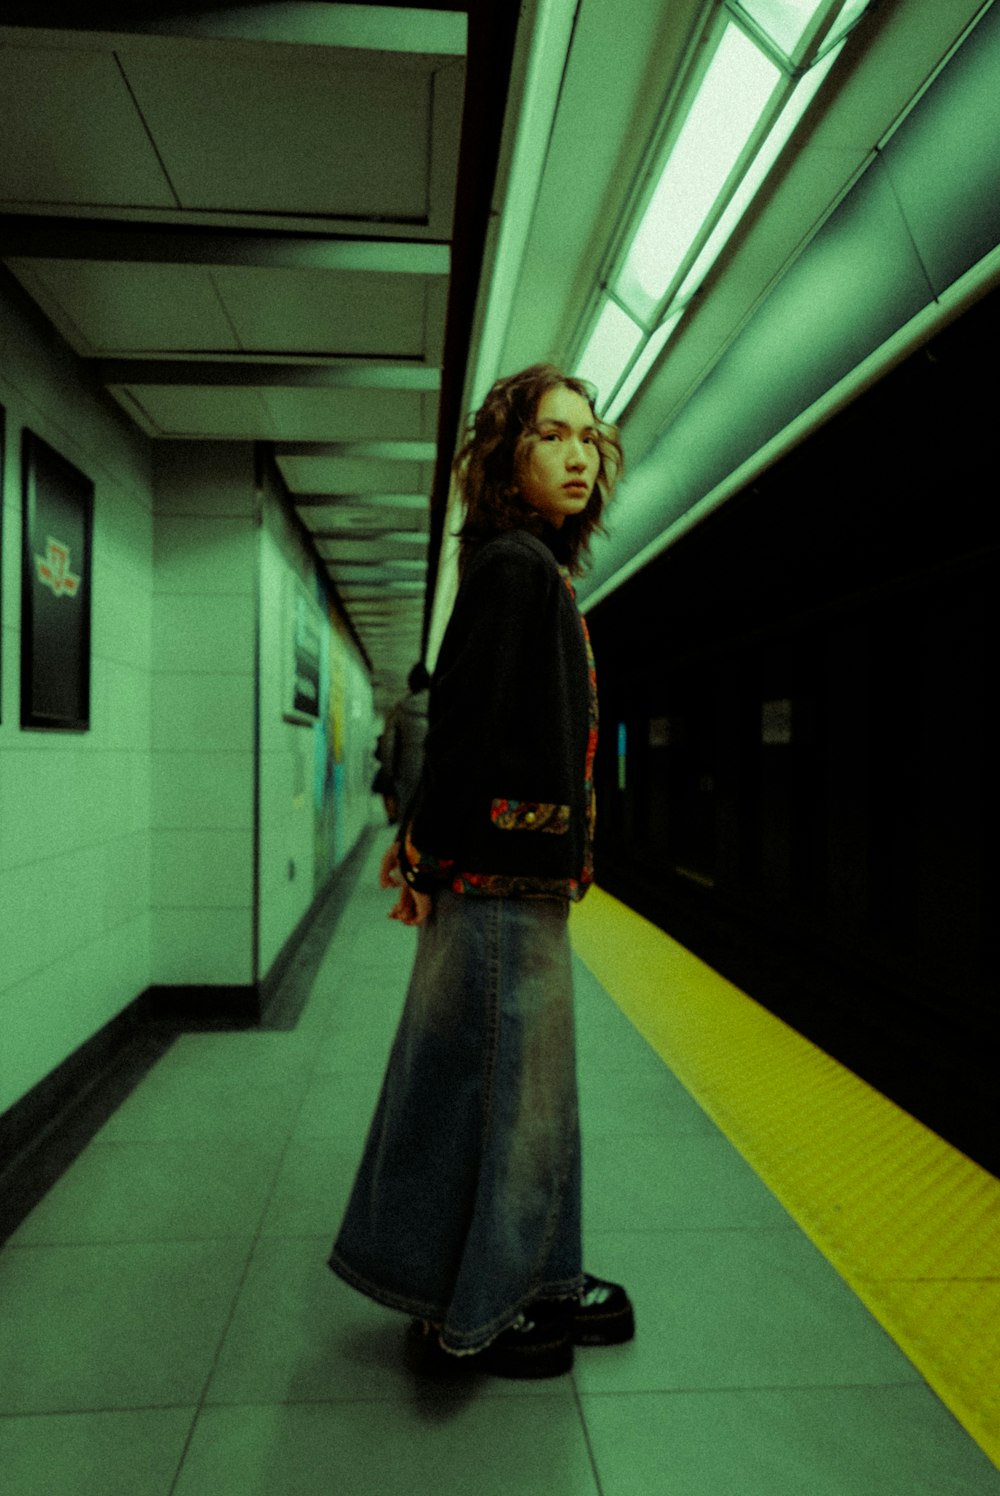 a woman standing on a subway platform next to a train